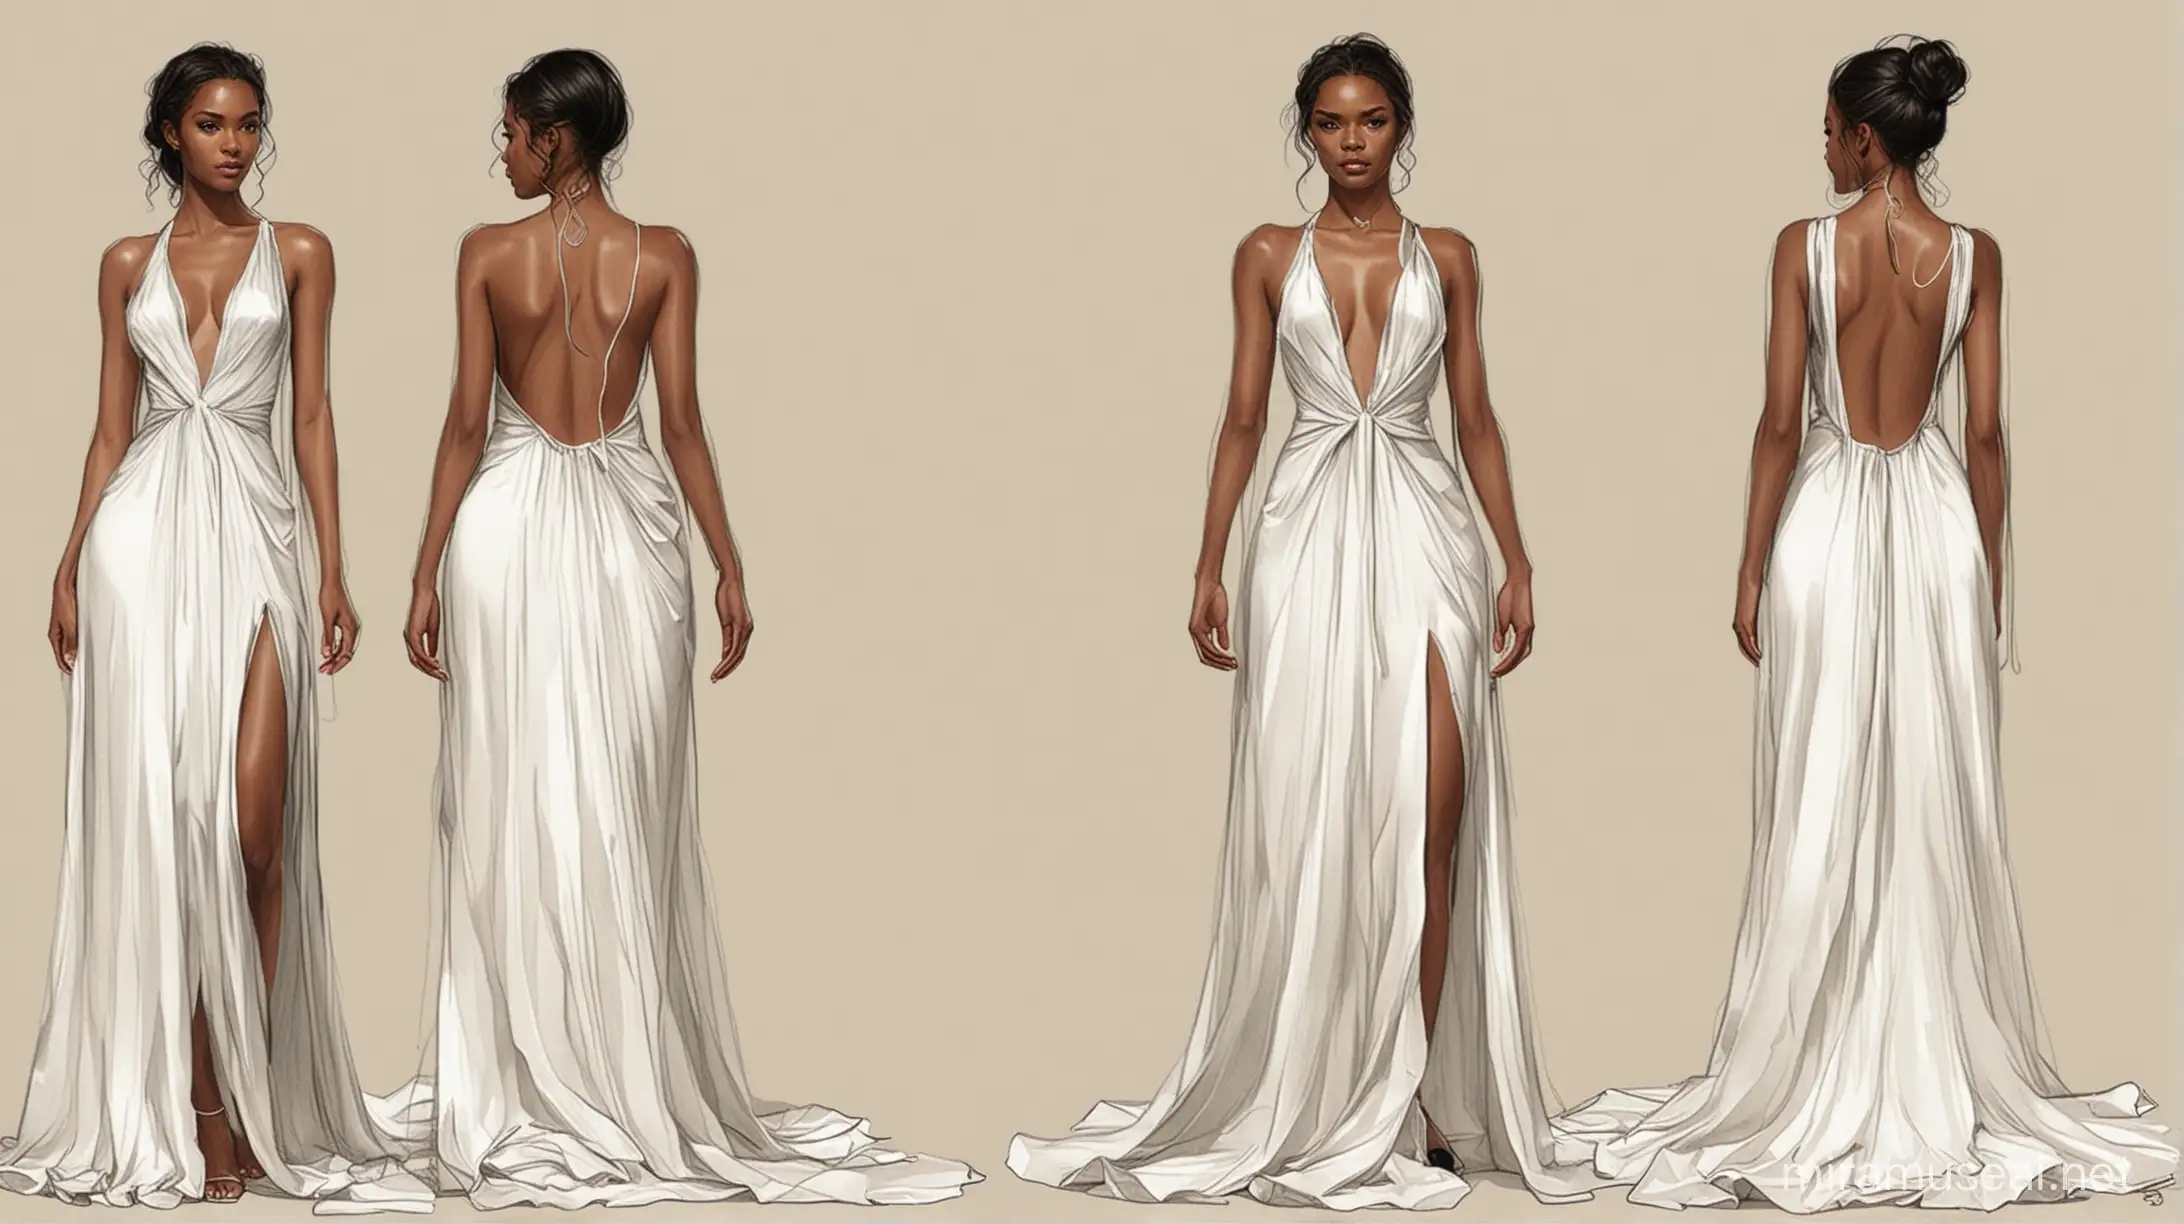 Fashion Illustration Elegant Backless Silk Dress with Artistic Markings on Bold Black Woman